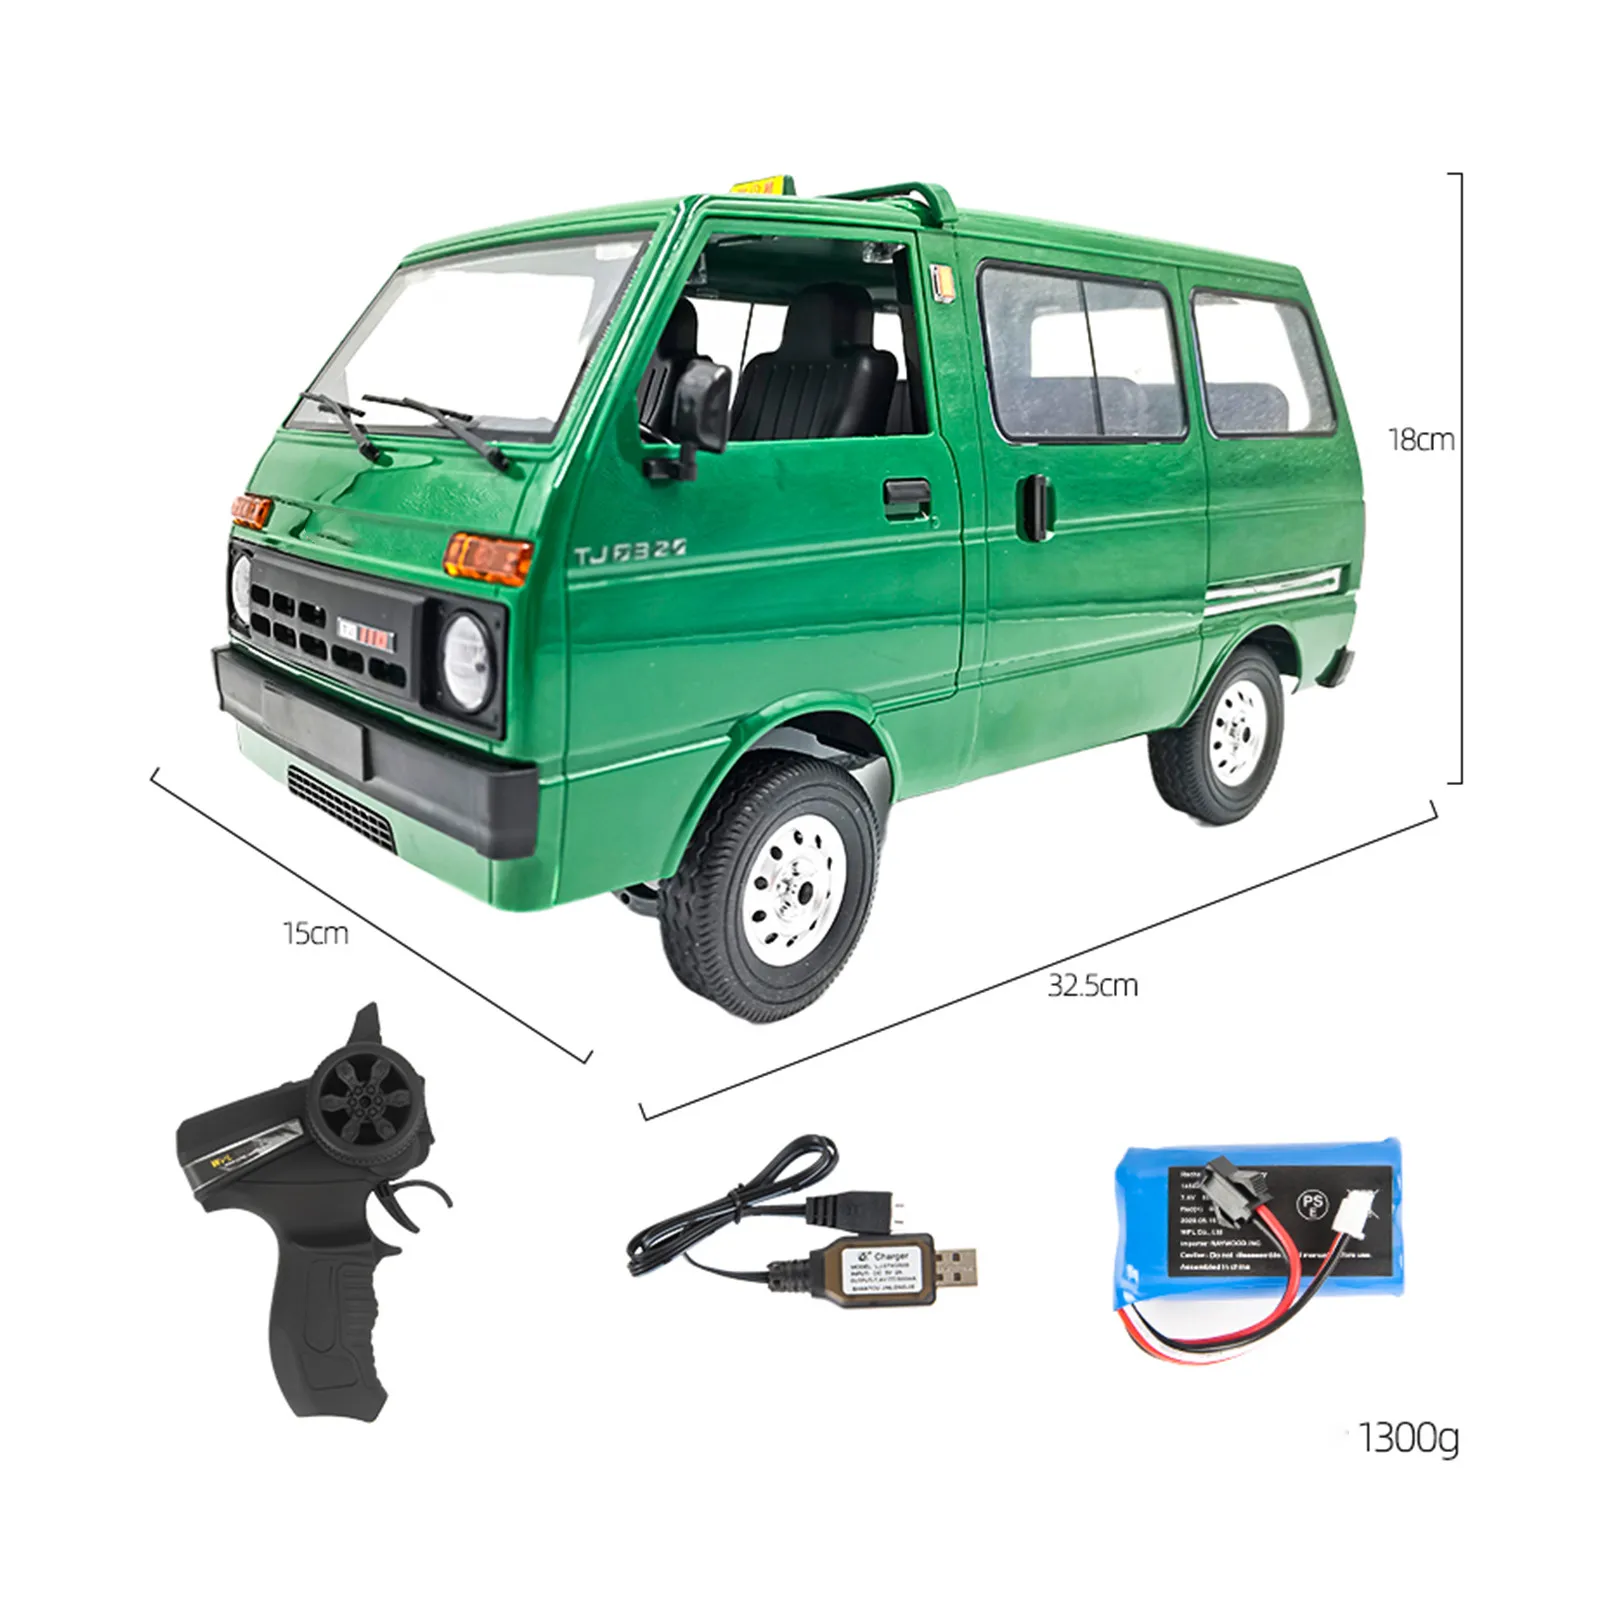 For WPL D42 1/10 RC Car 2.4G Simulation Drift Climbing Truck High Performance Motor Minivan Model Cars Toys For Boys Gifts enlarge